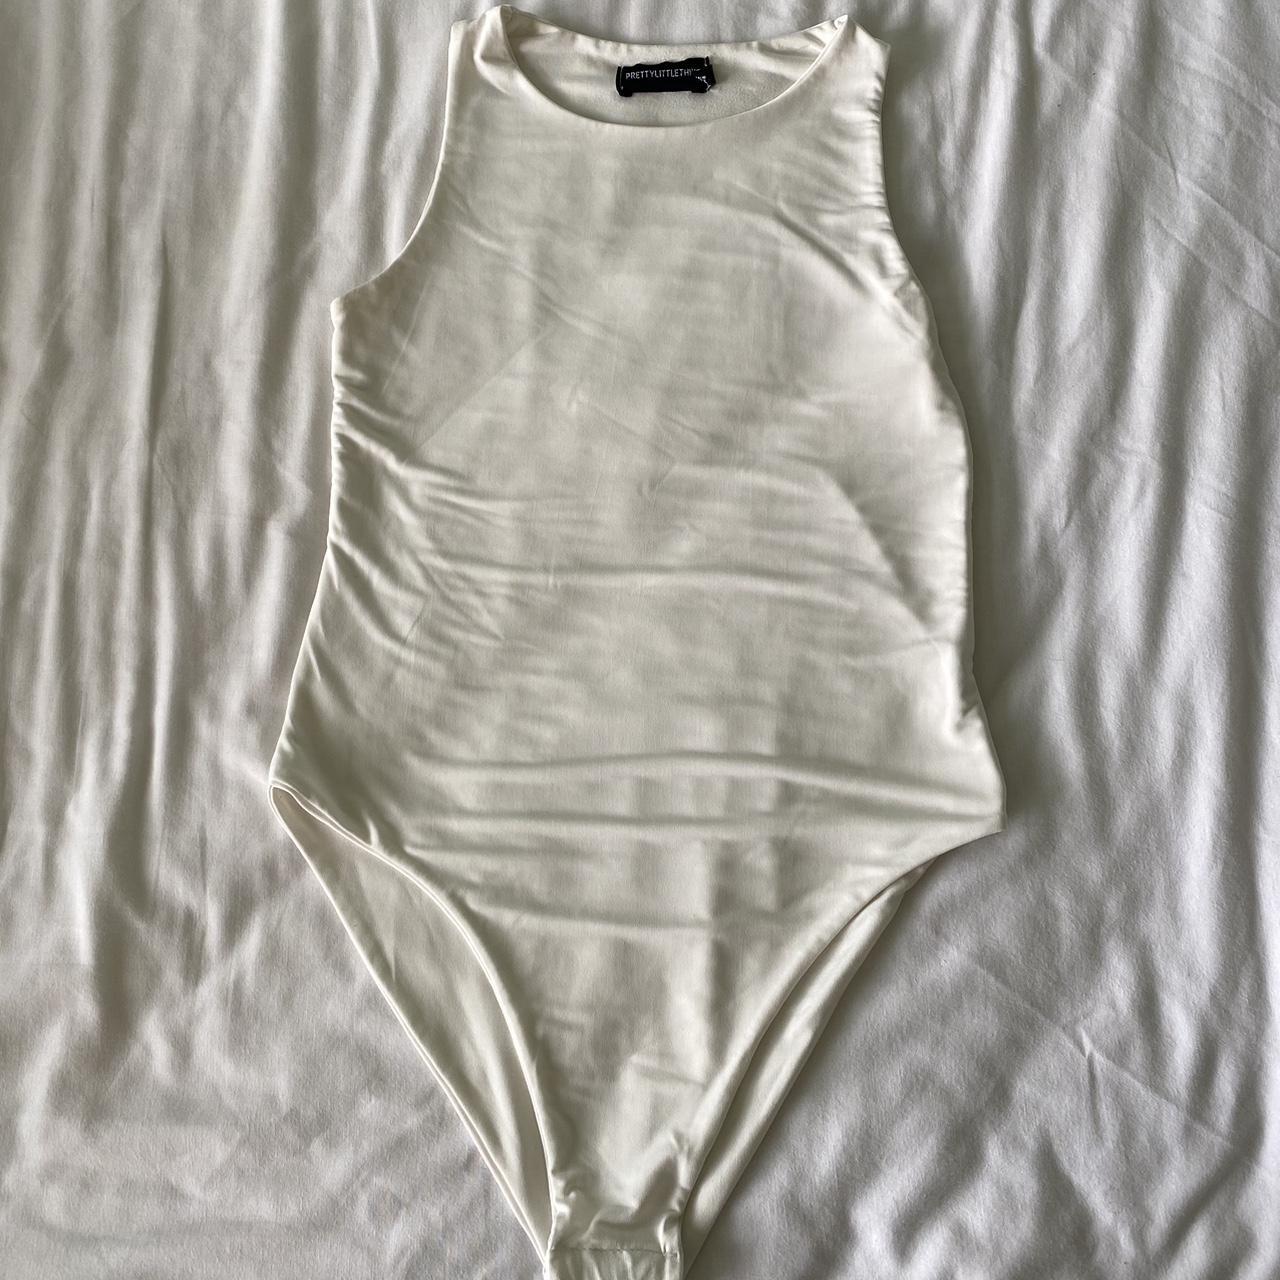 PrettyLittleThing White Slinky Racer Bodysuit, Size